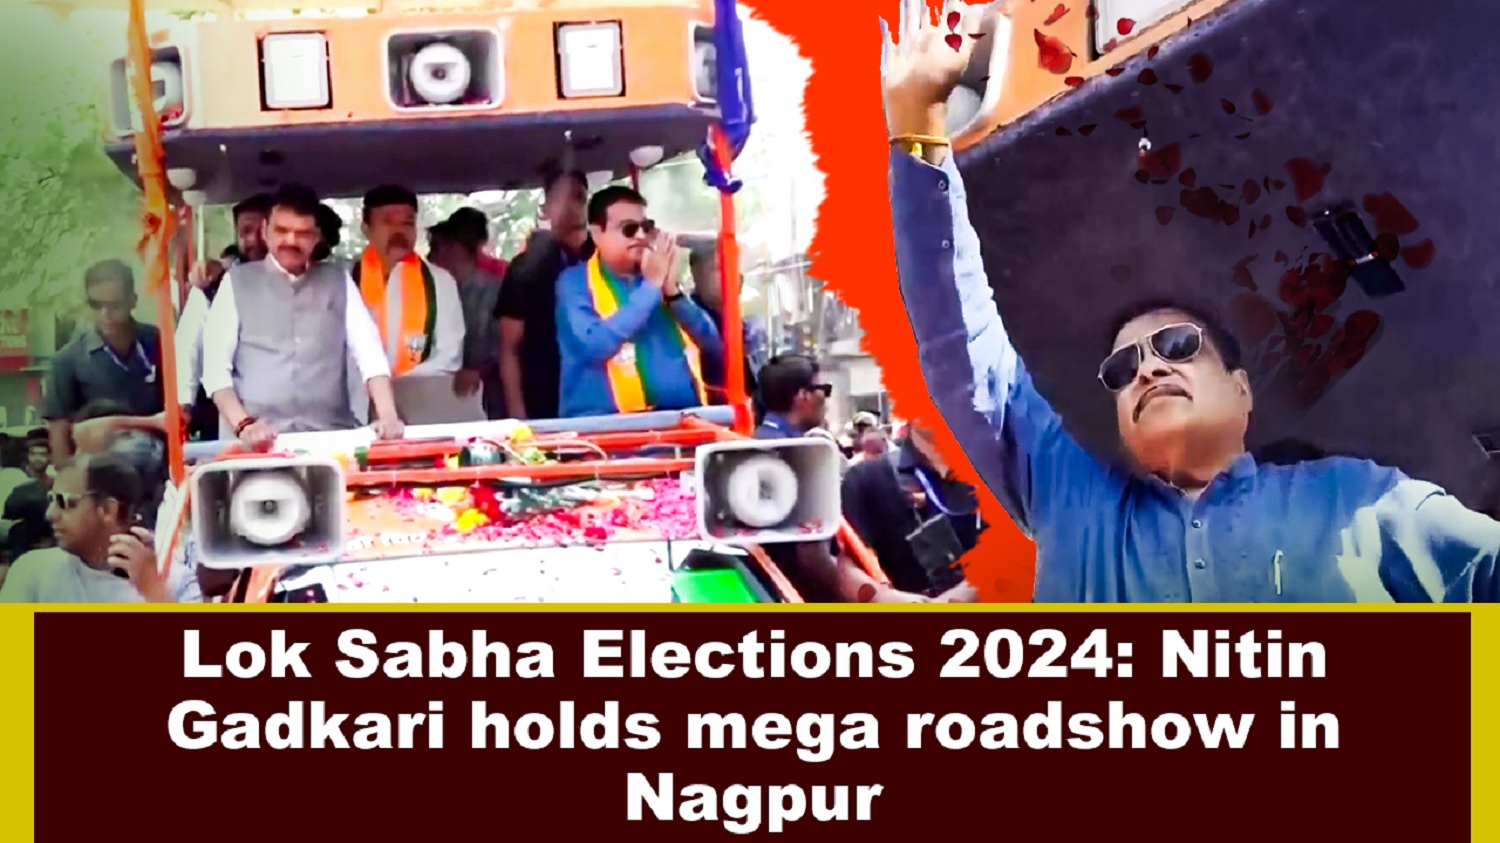 Lok Sabha Elections 2024: Nitin Gadkari holds mega roadshow in Nagpur